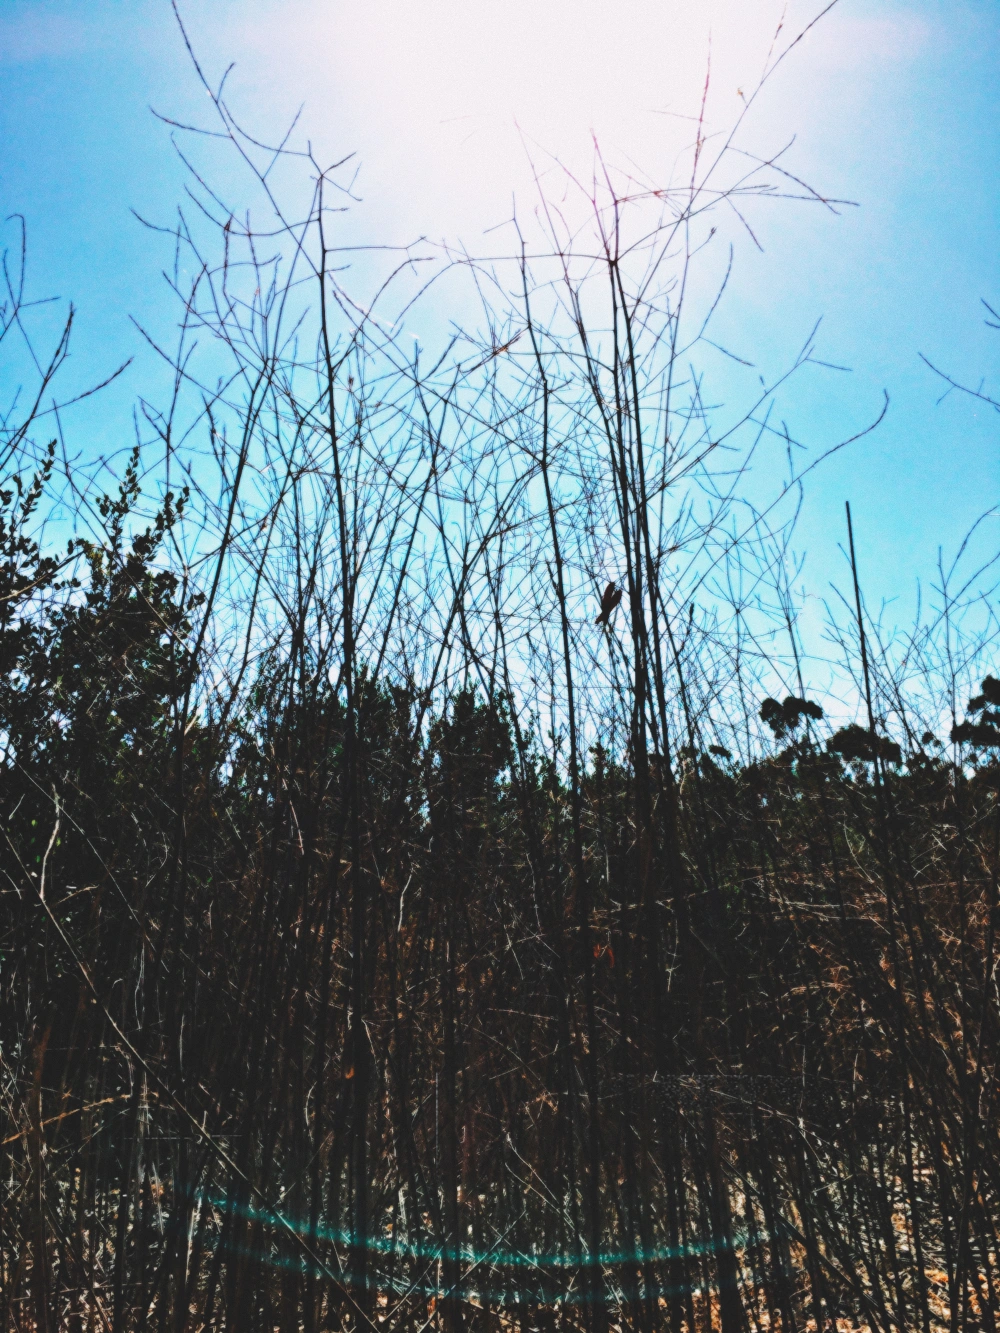 #sunbeams #lookup #tallgrass #hikelife